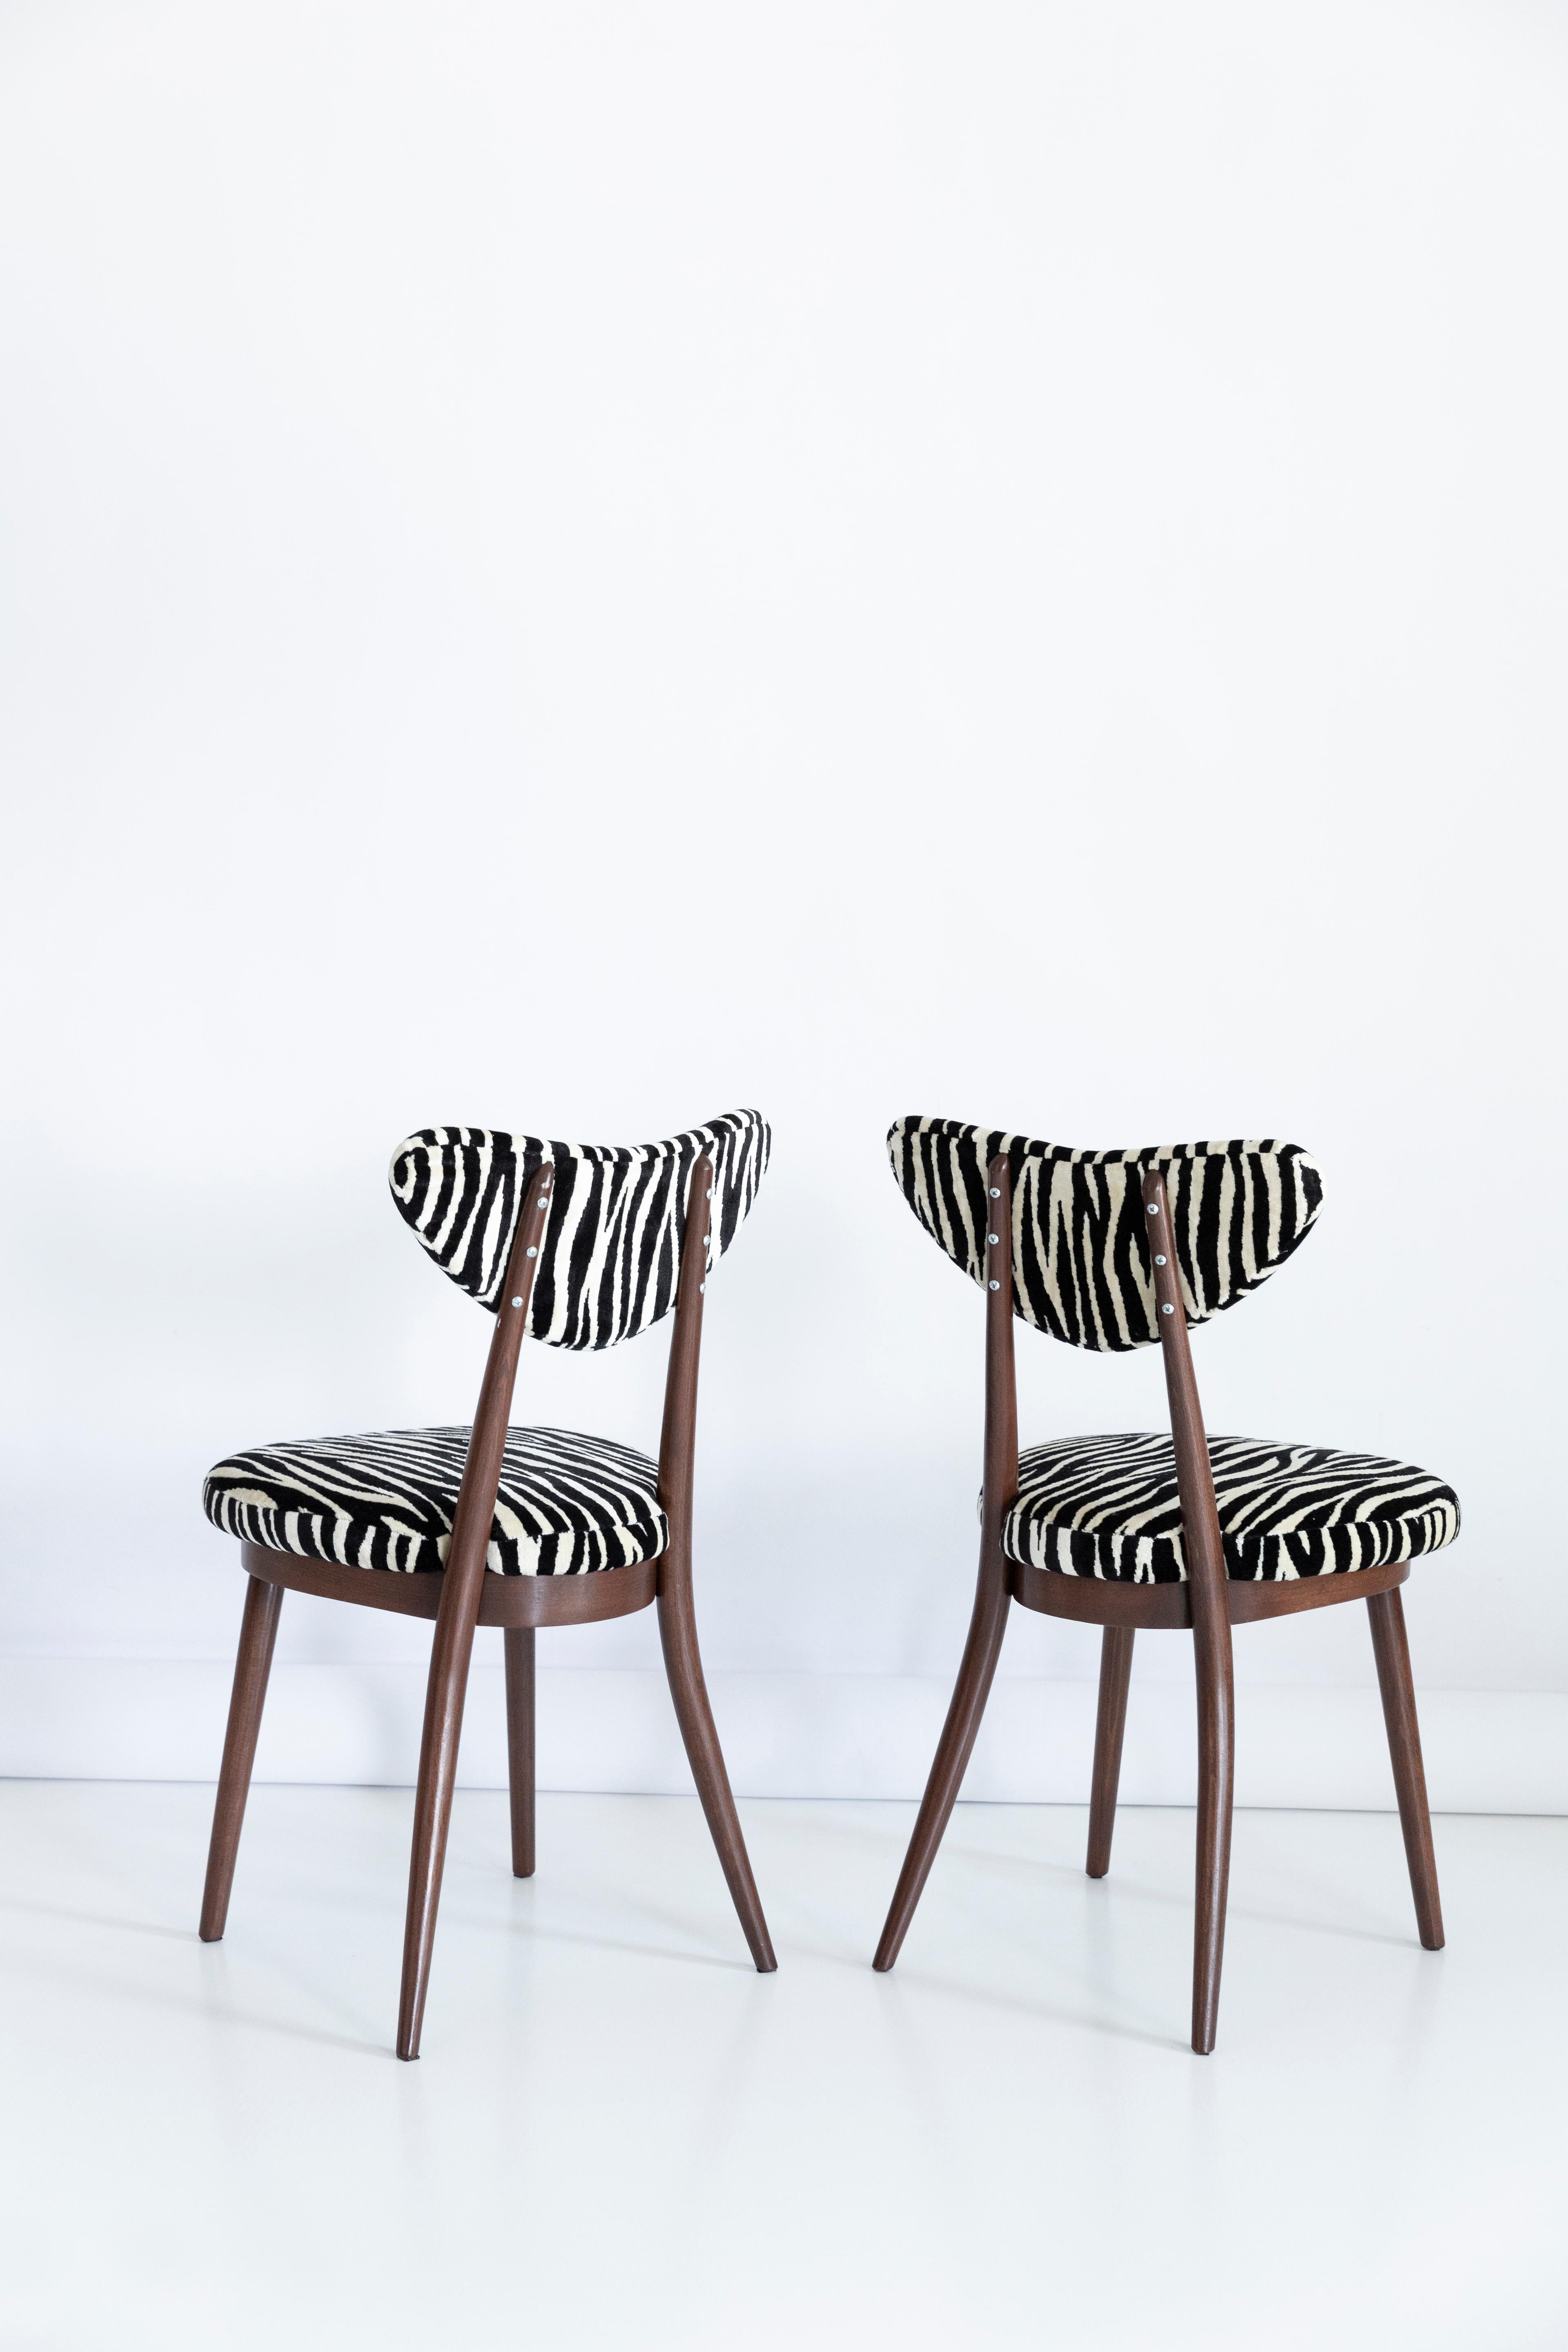 Velvet Set of Six Midcentury Zebra Black and White Heart Chairs, Poland, 1960s For Sale